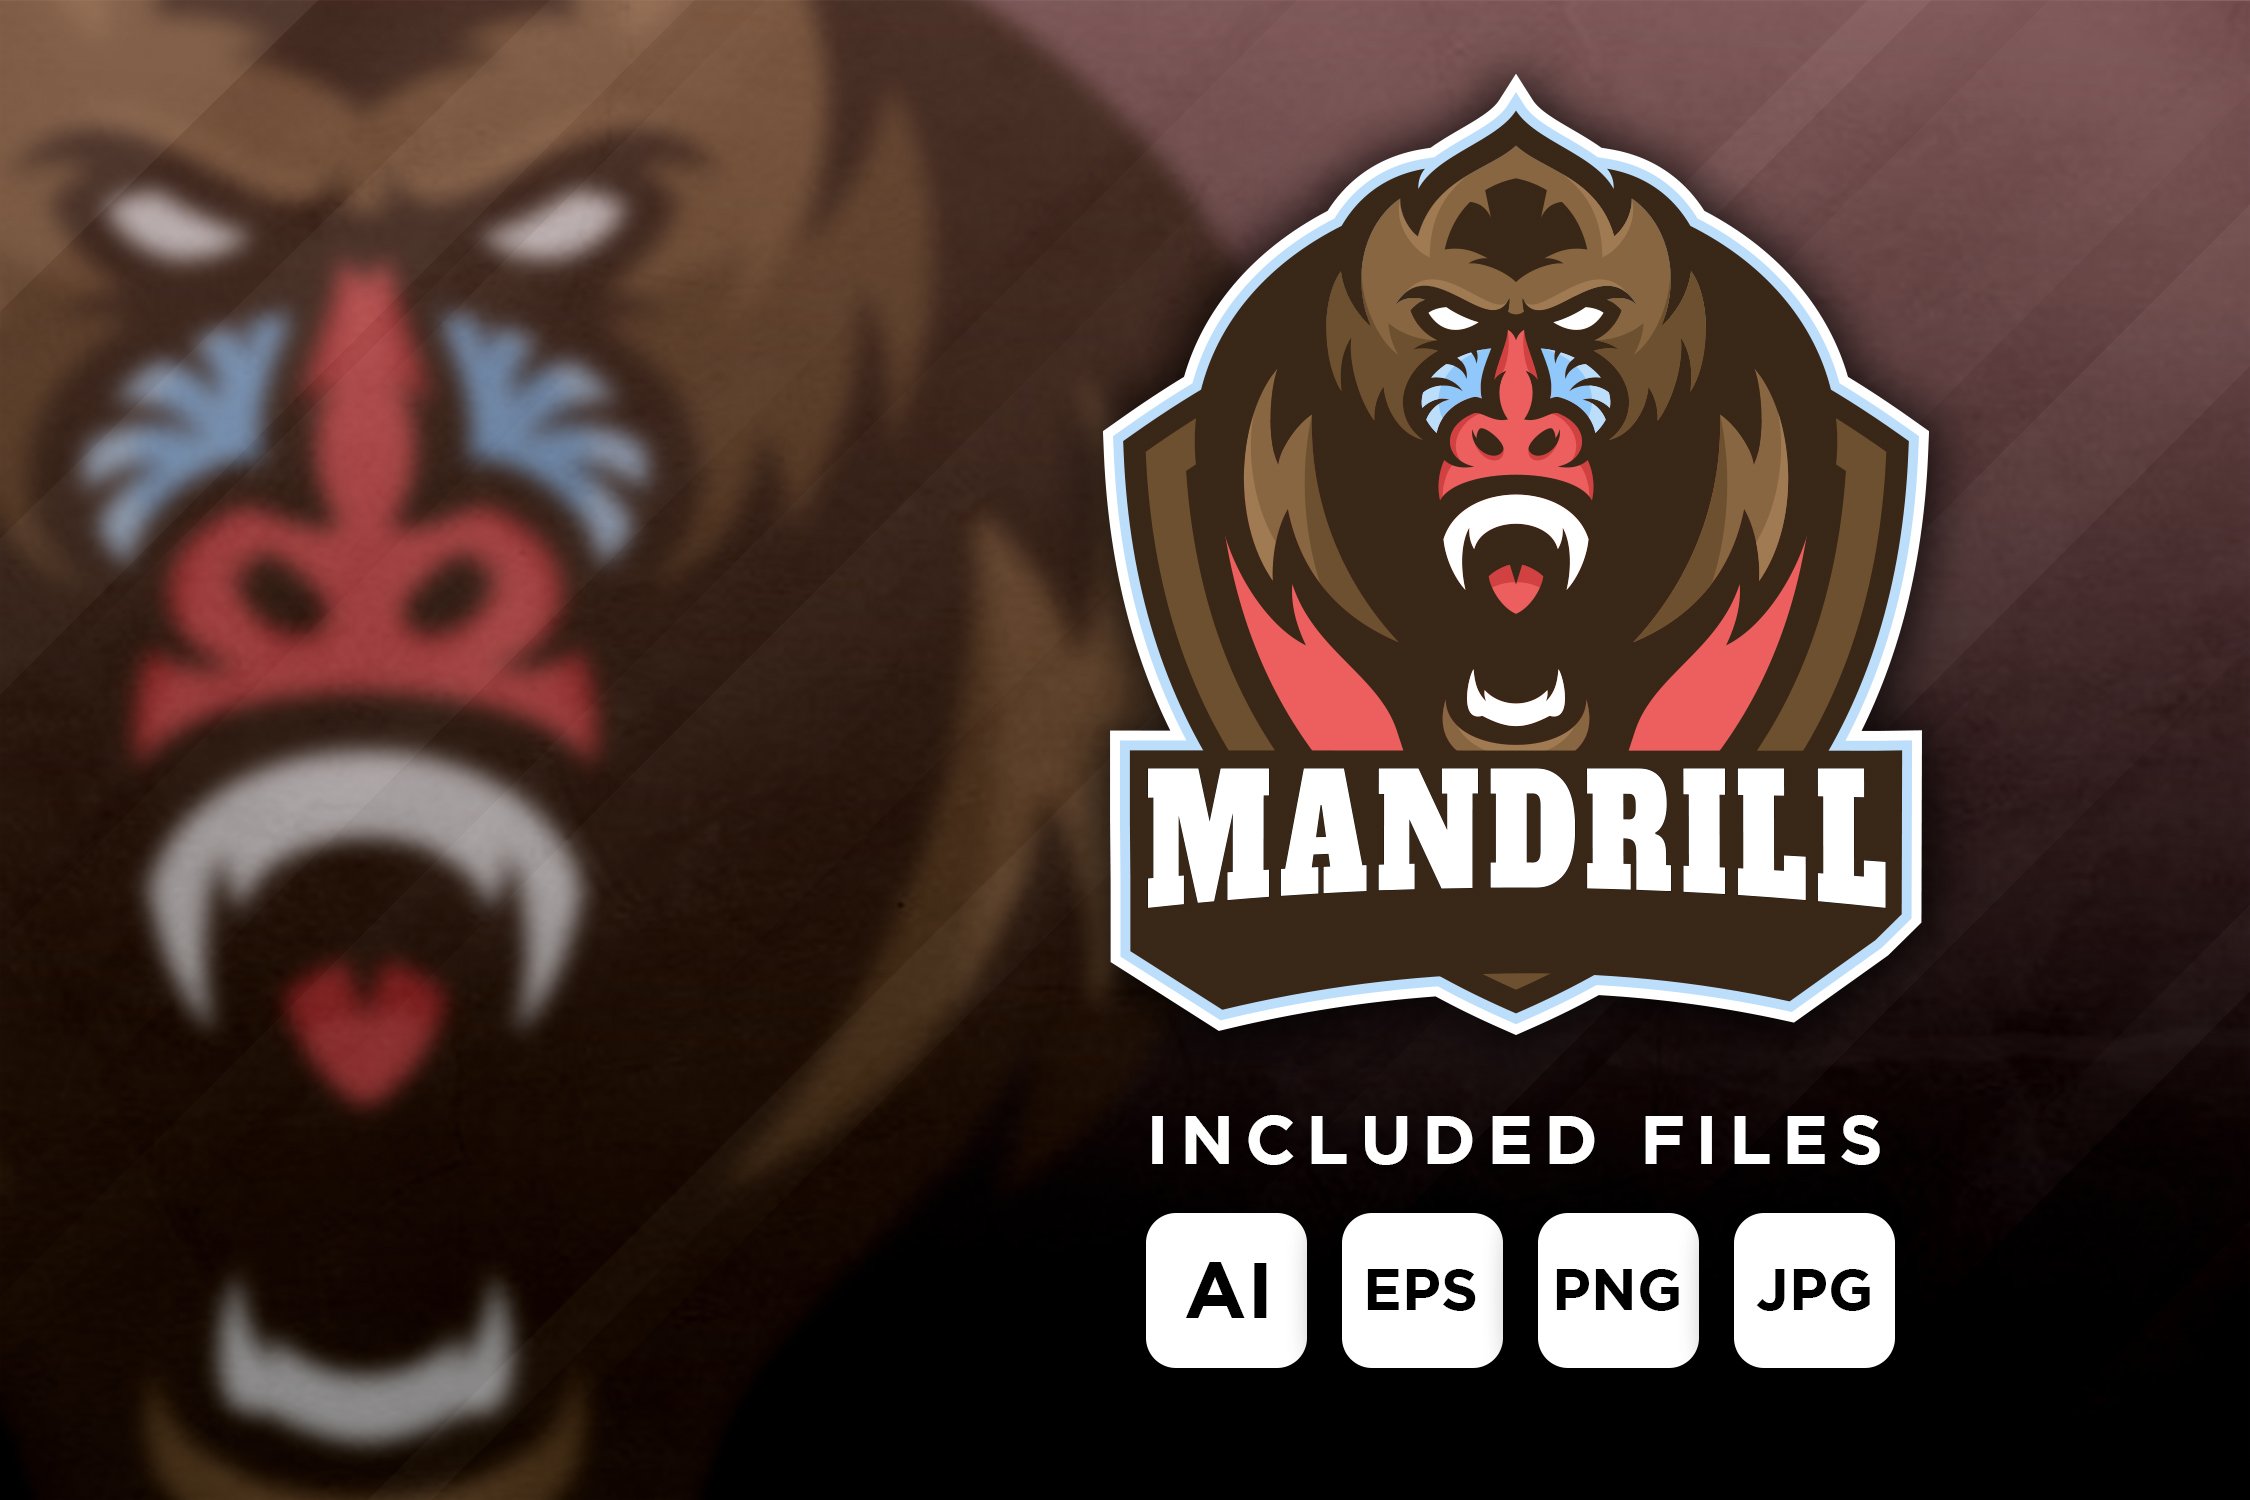 Mandrill - mascot logo for a team cover image.